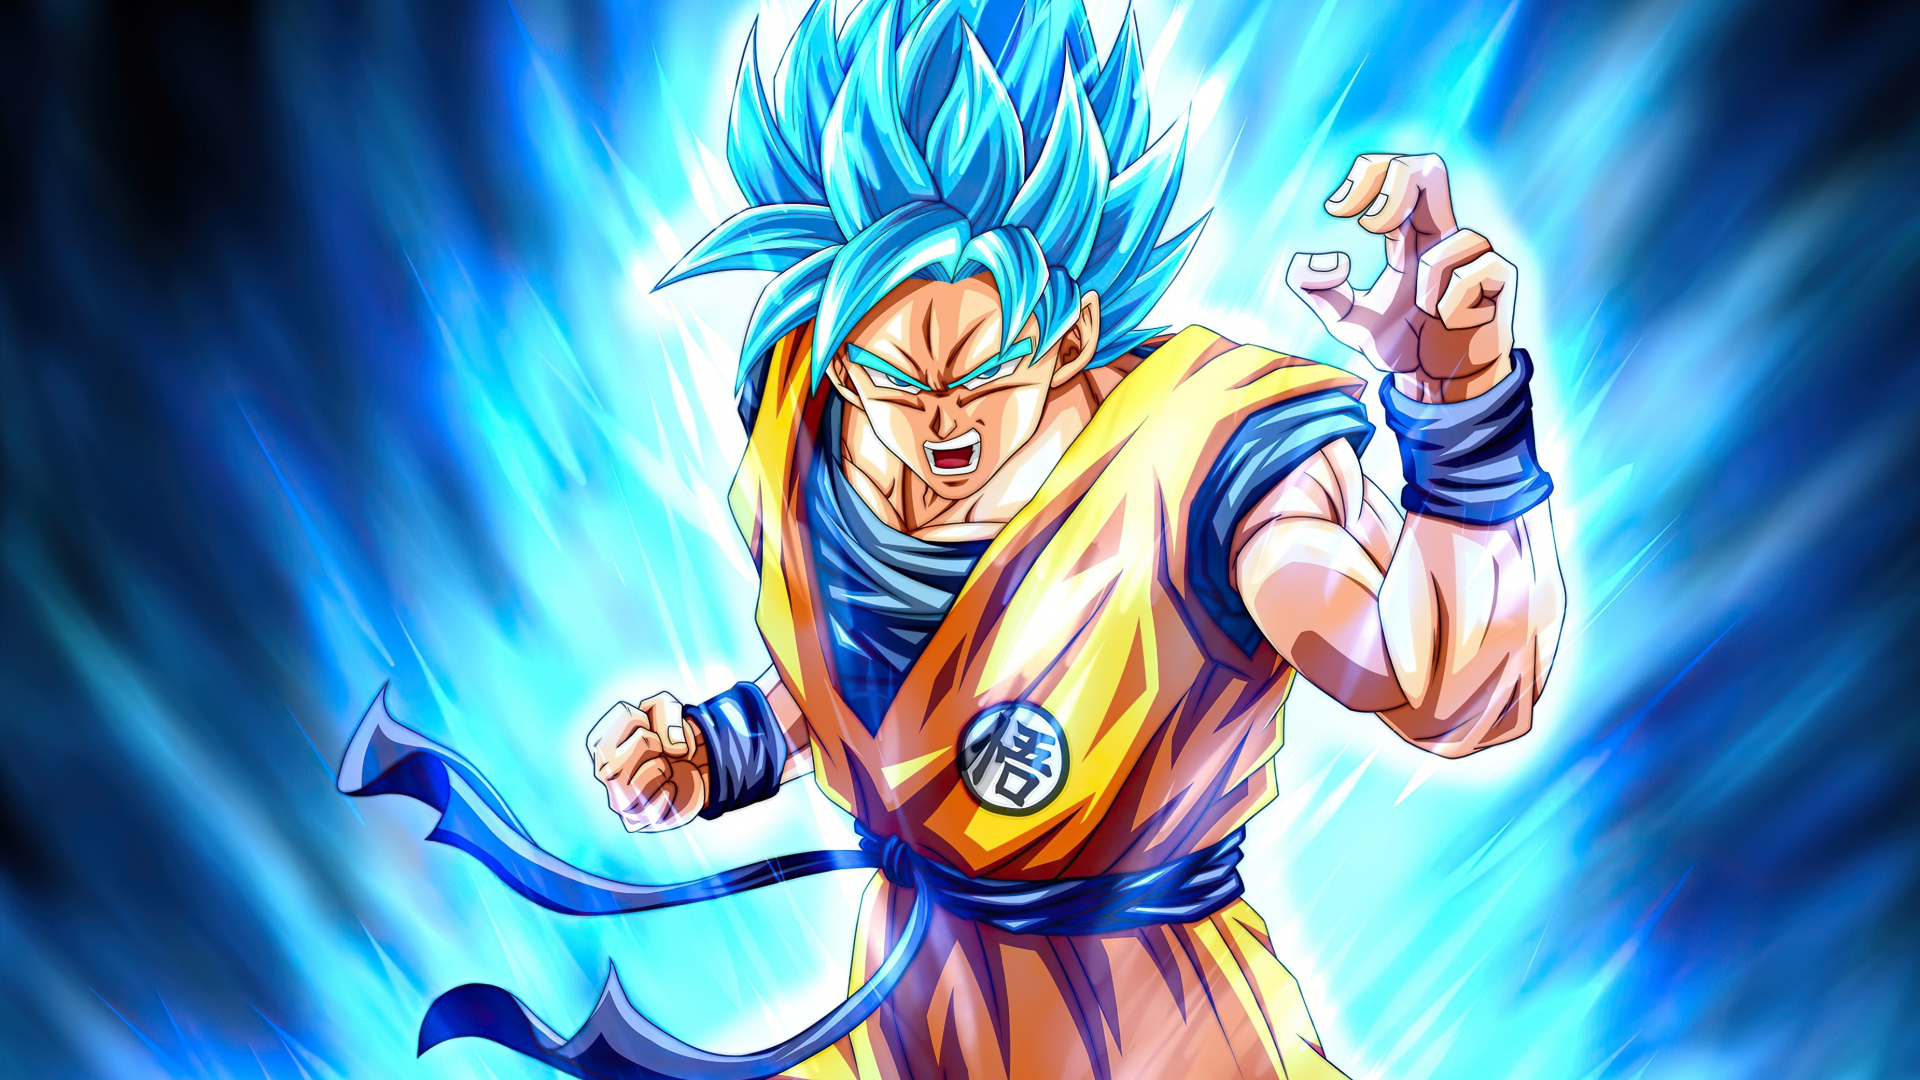 Goku's Blue Hair Power Up - wide 4